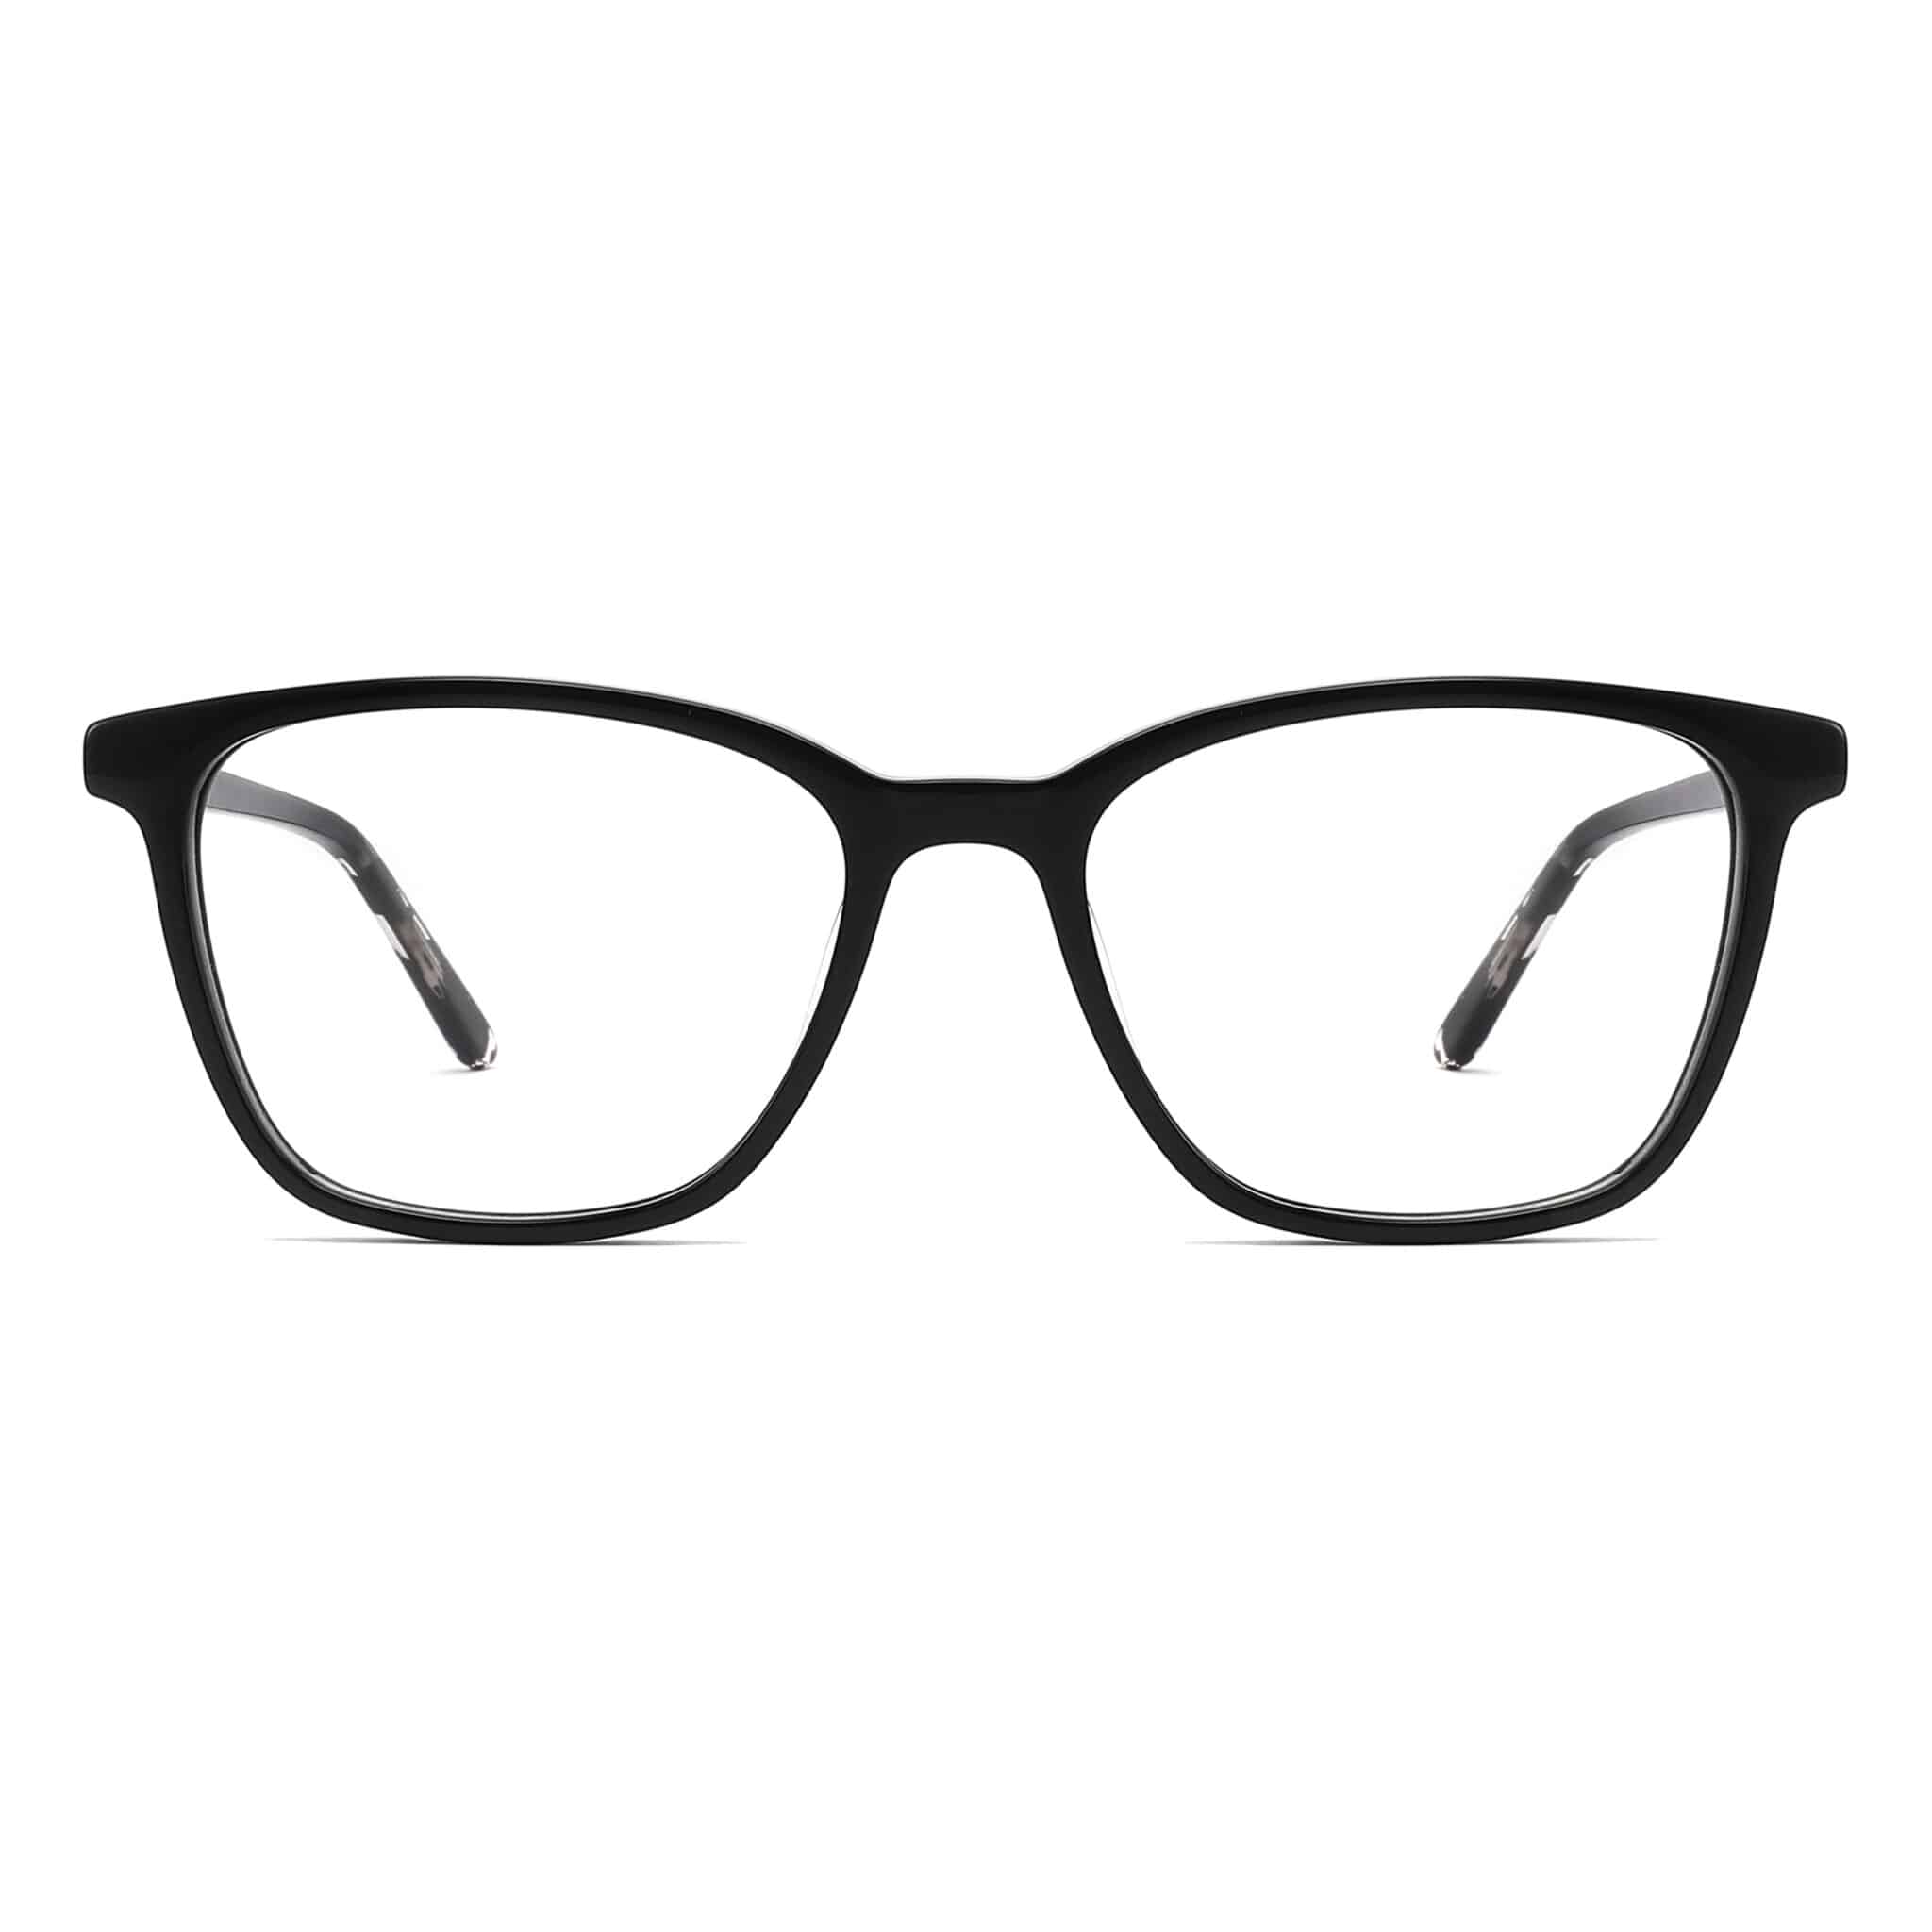 Latest Style Optical Frame Glasses